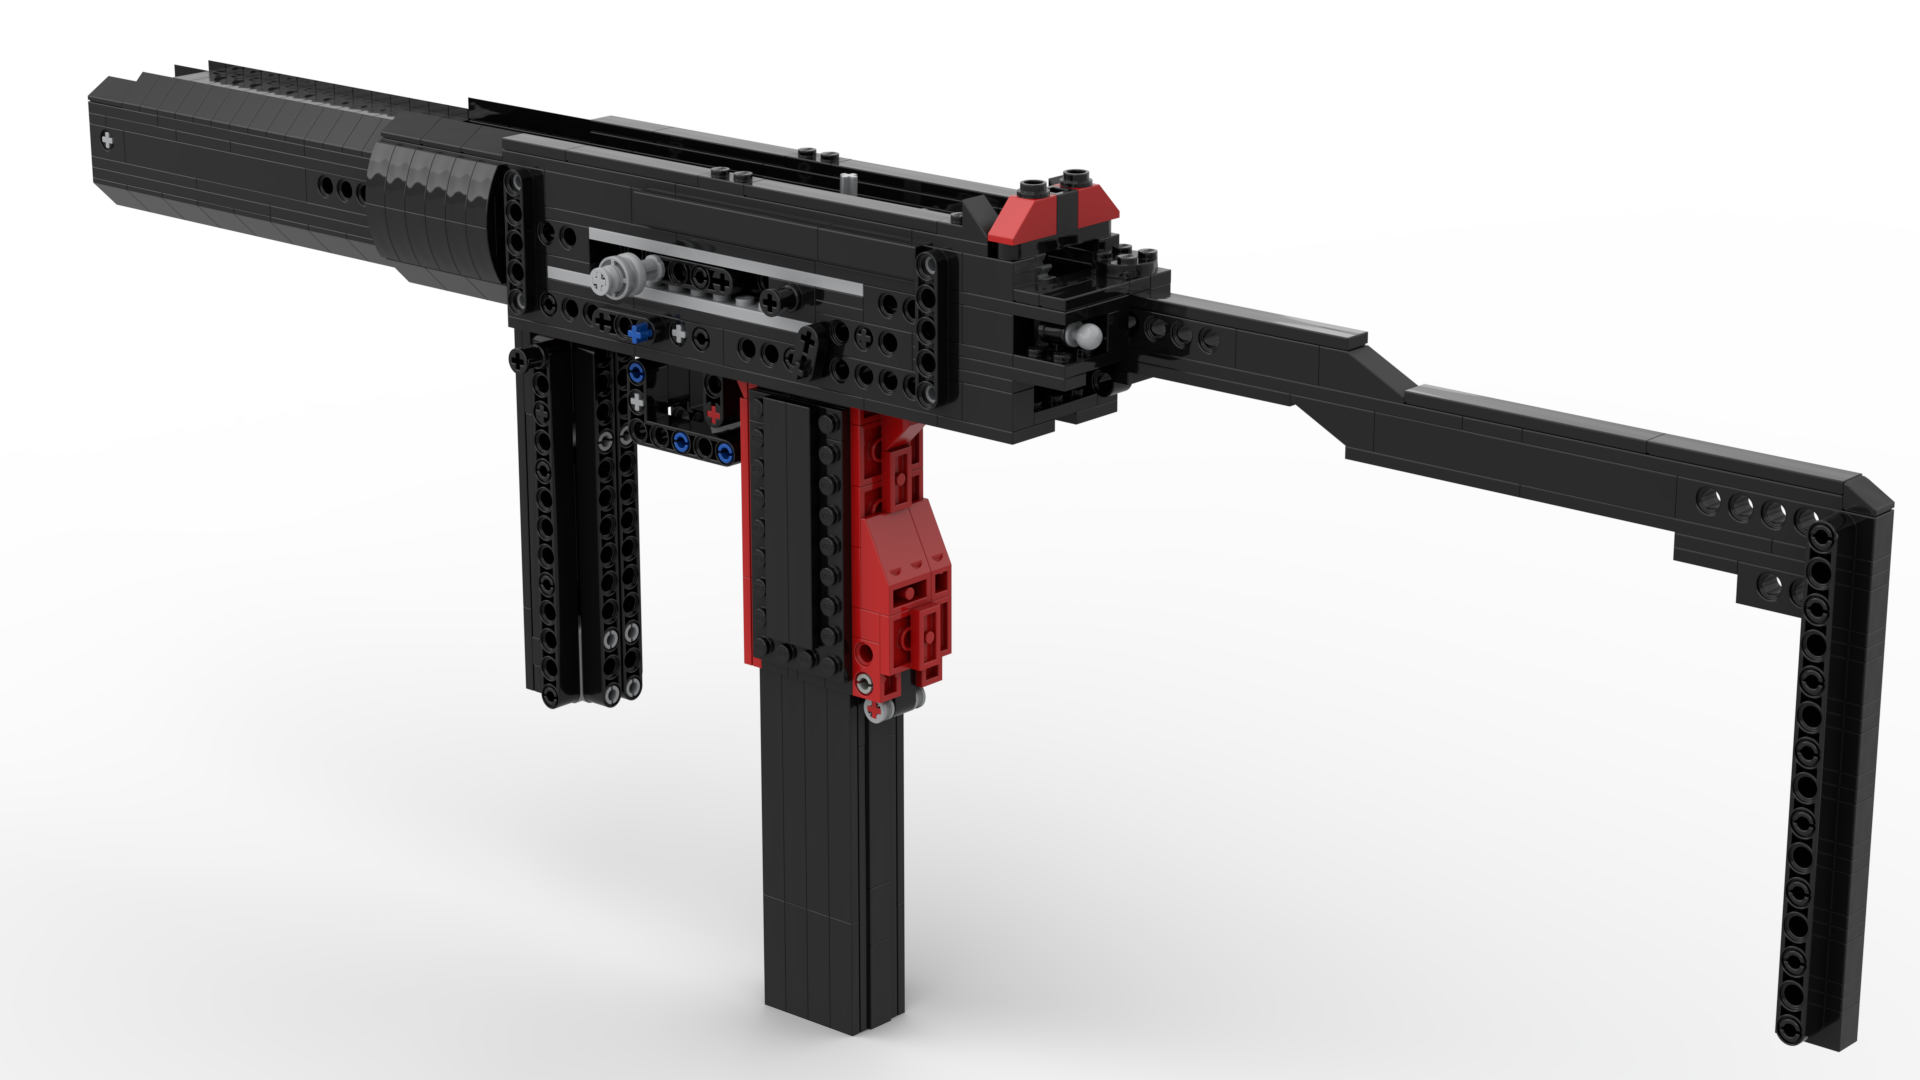 Lego Blowback Hi-Capacity Gun, Full Auto MP